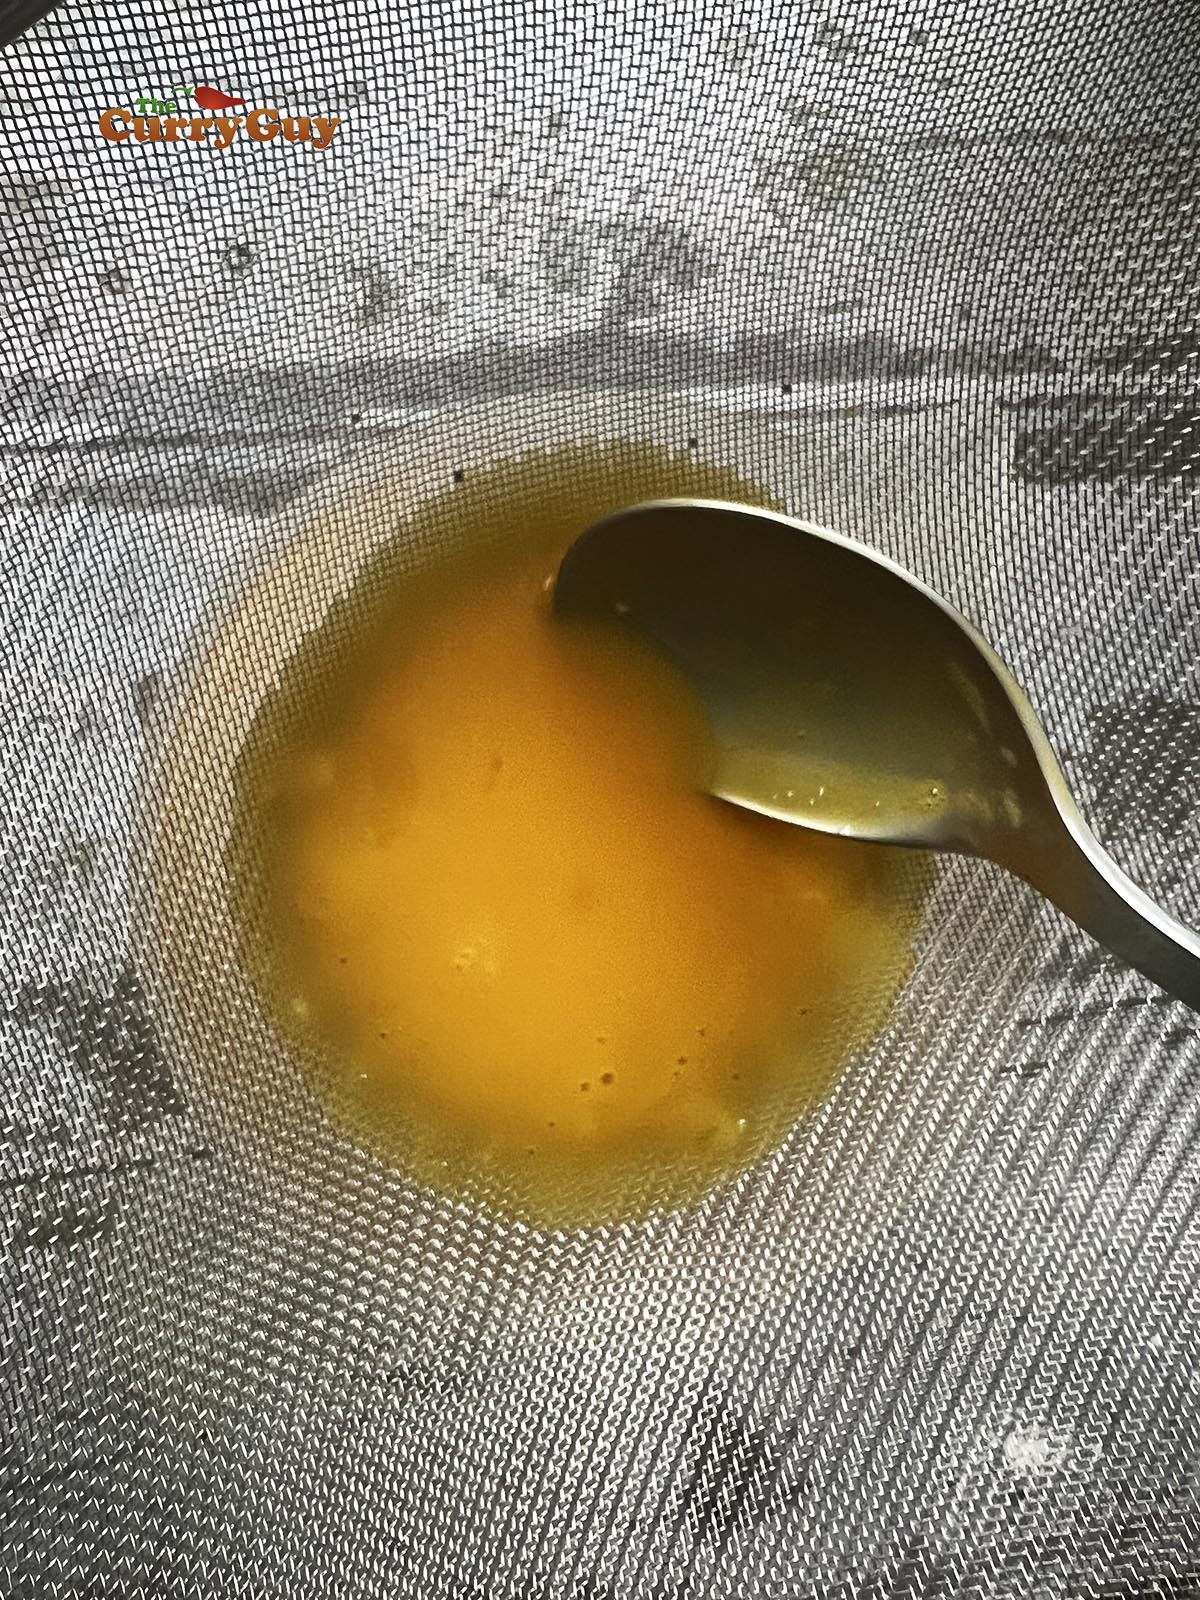 Putting egg yolks through a sieve.